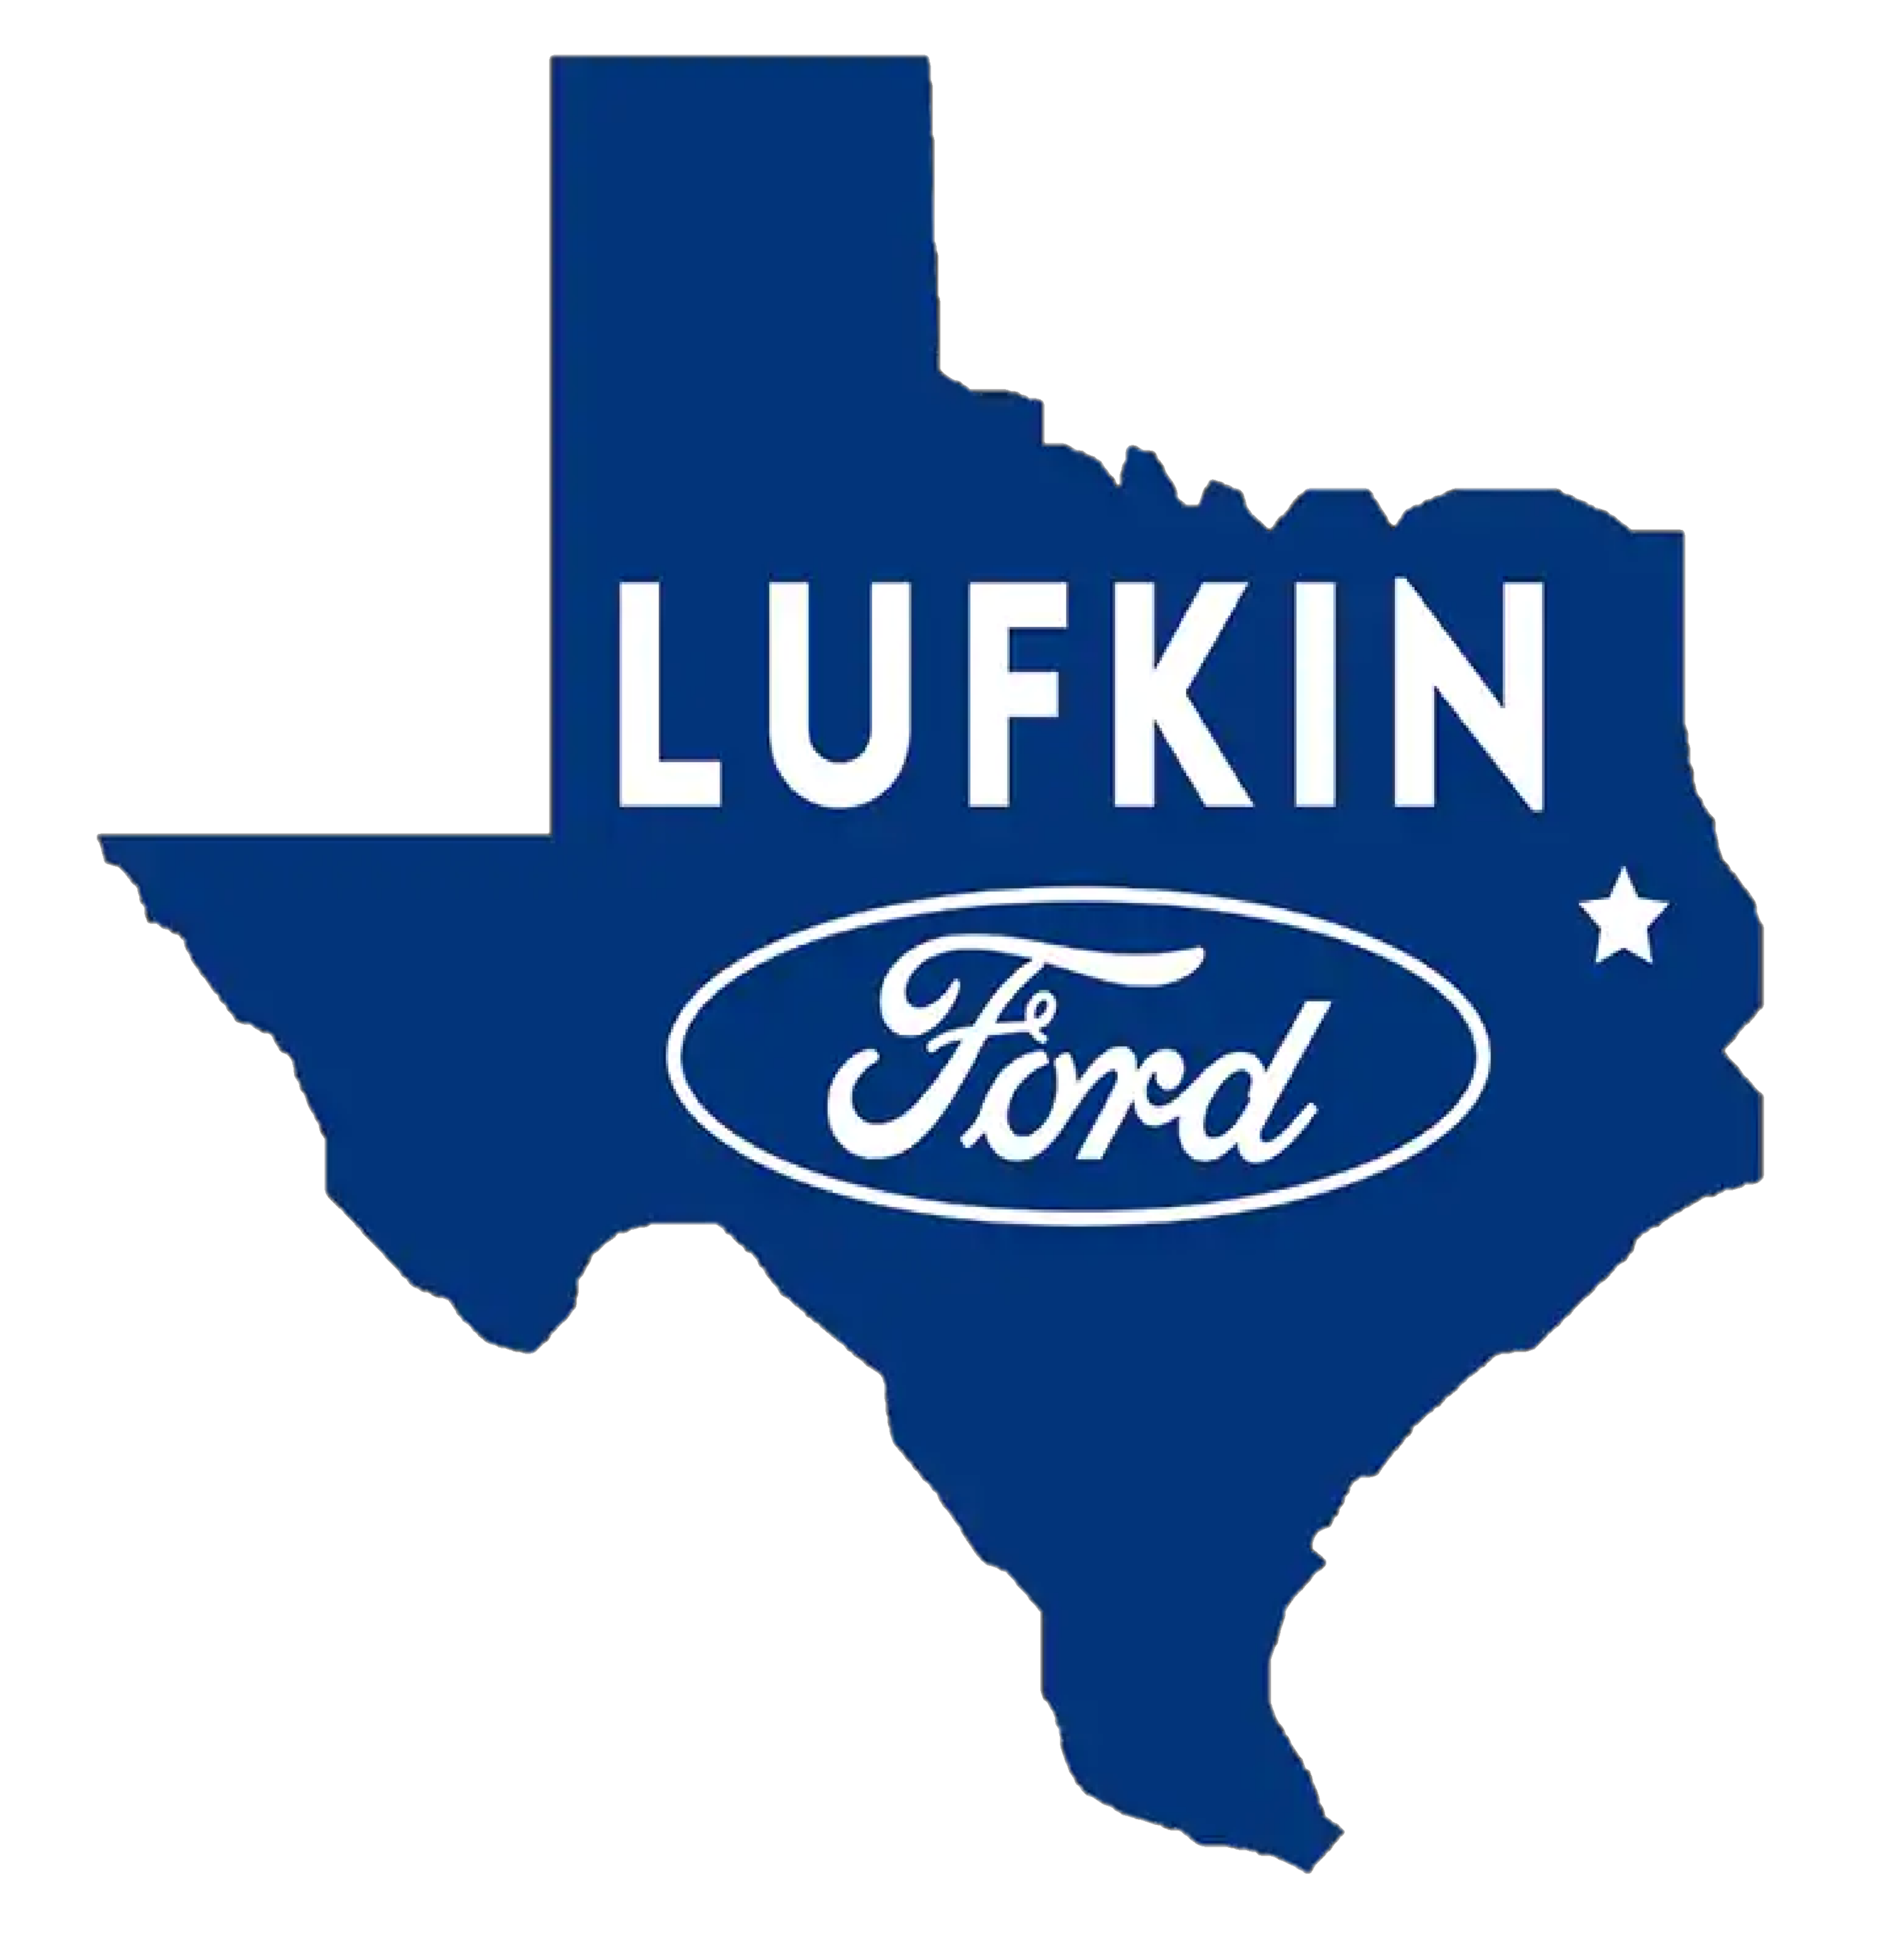 C. (Event Day) Lufkin Ford